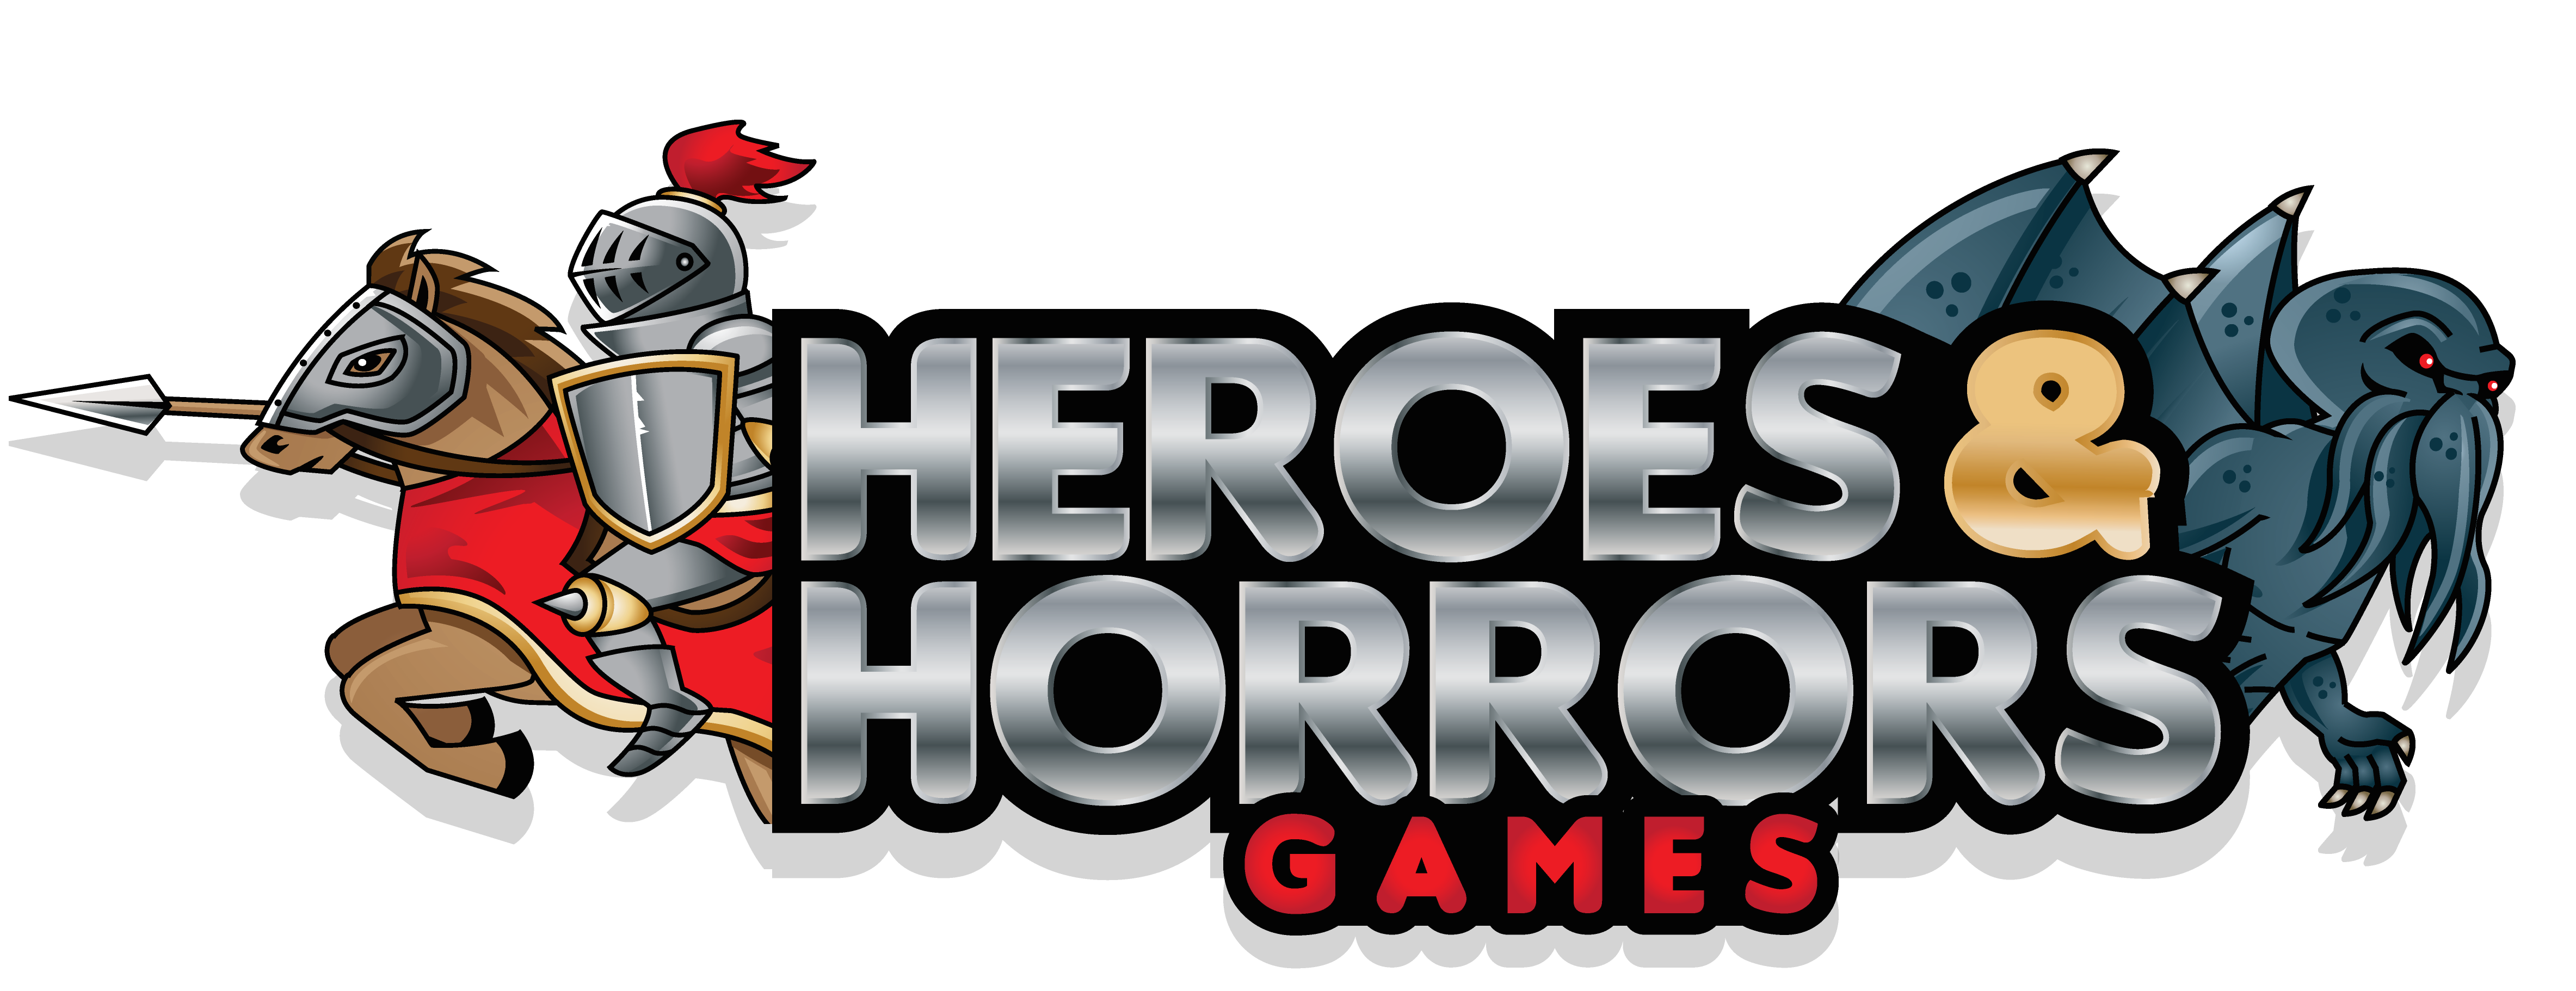 Heroes & Horrors Games logo